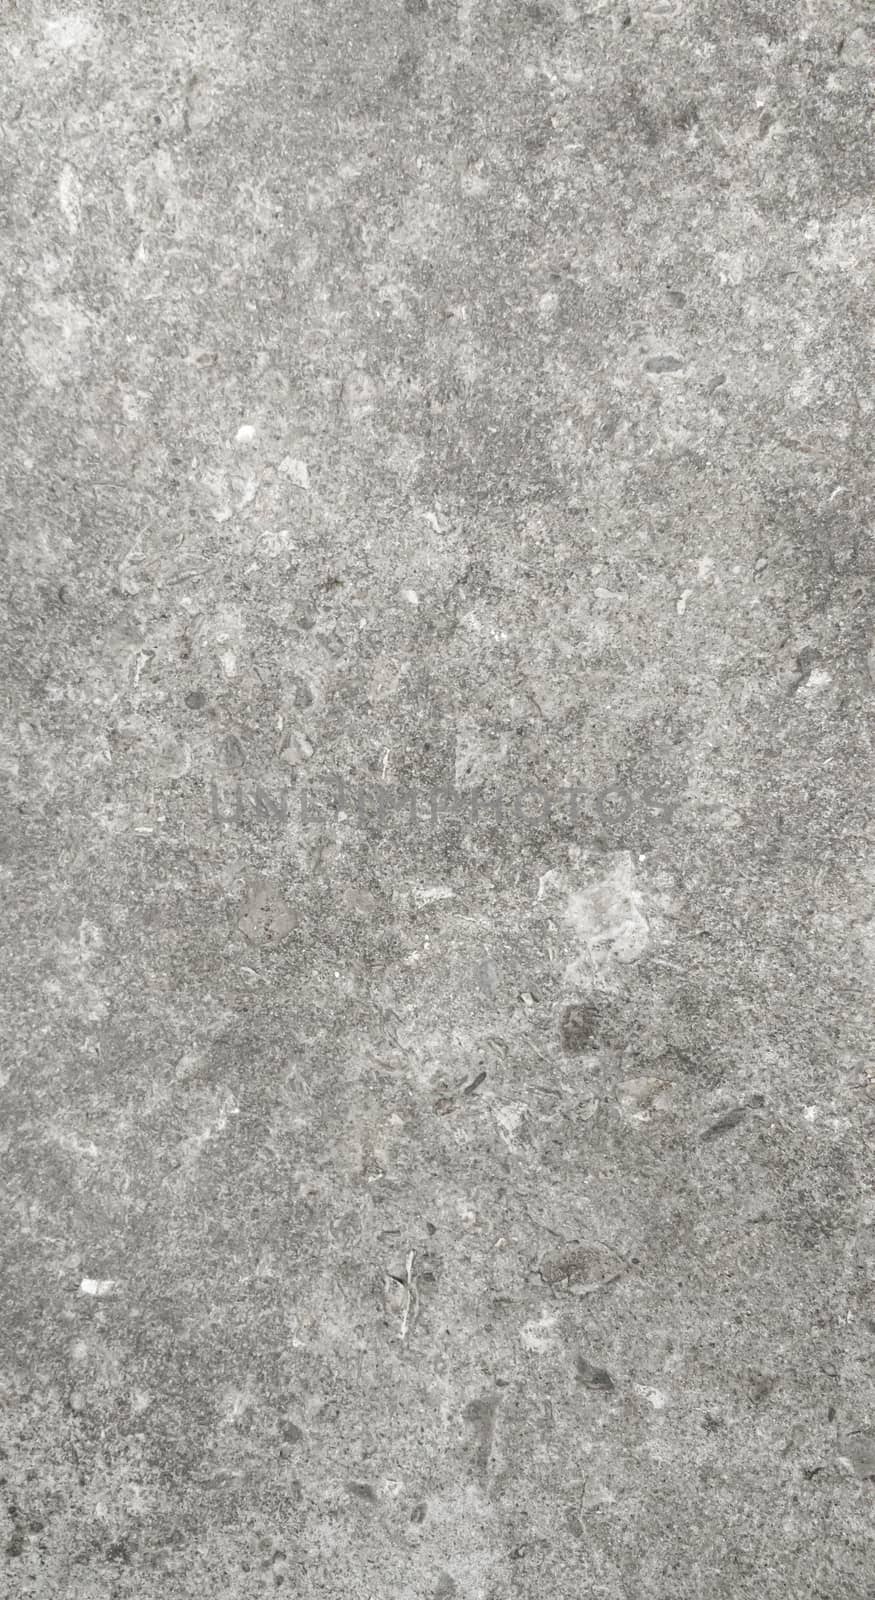 Concrete gray wall,  texture. by zeffss